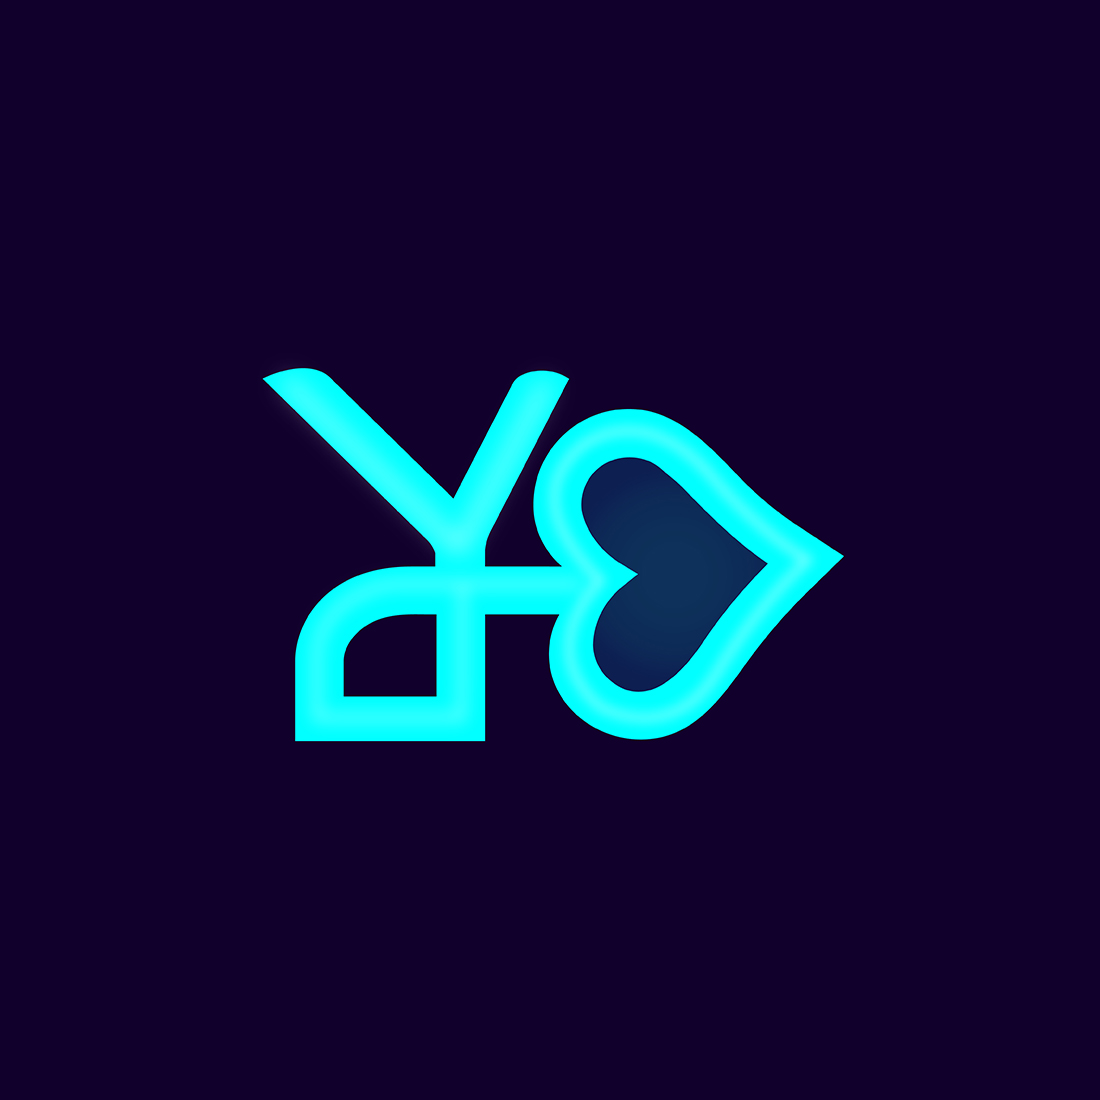 Minimal colourful Letter Y Logo design preview image.